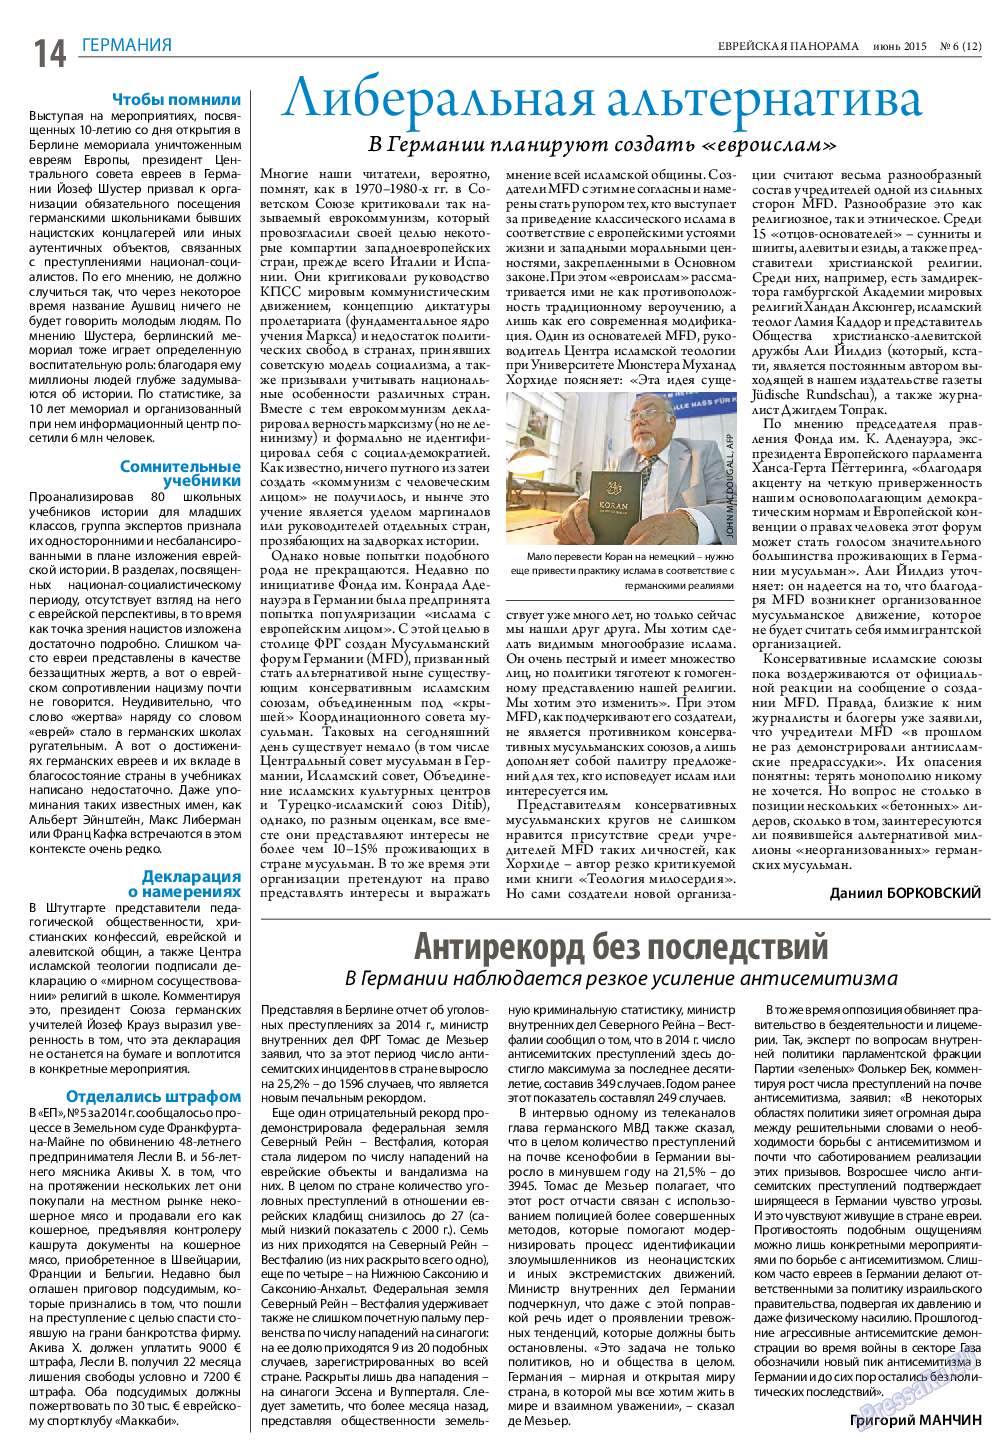 Еврейская панорама, газета. 2015 №6 стр.14